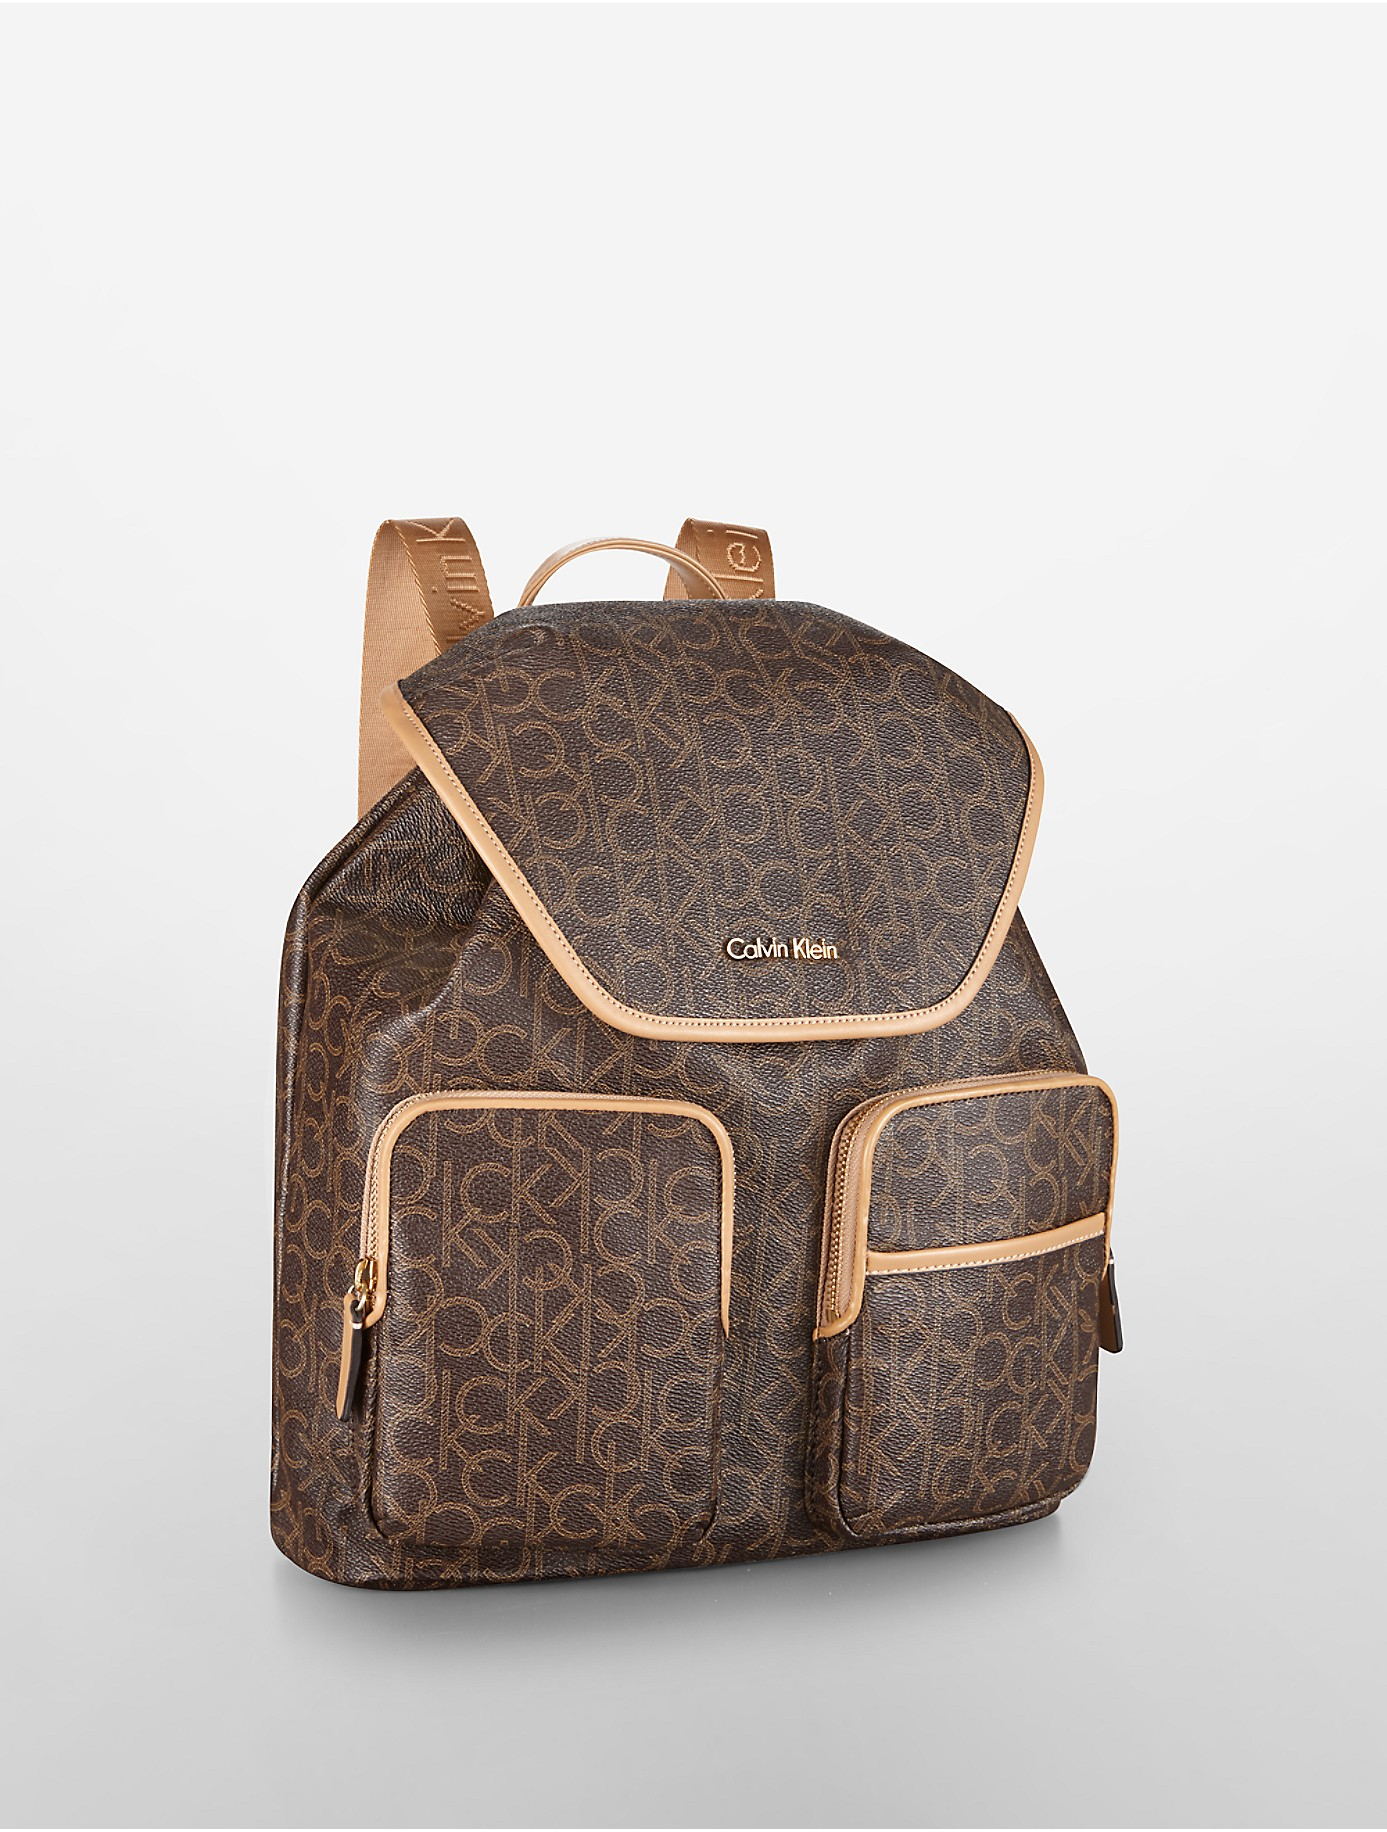 Lyst - Calvin Klein Hudson Logo Leather Backpack in Brown